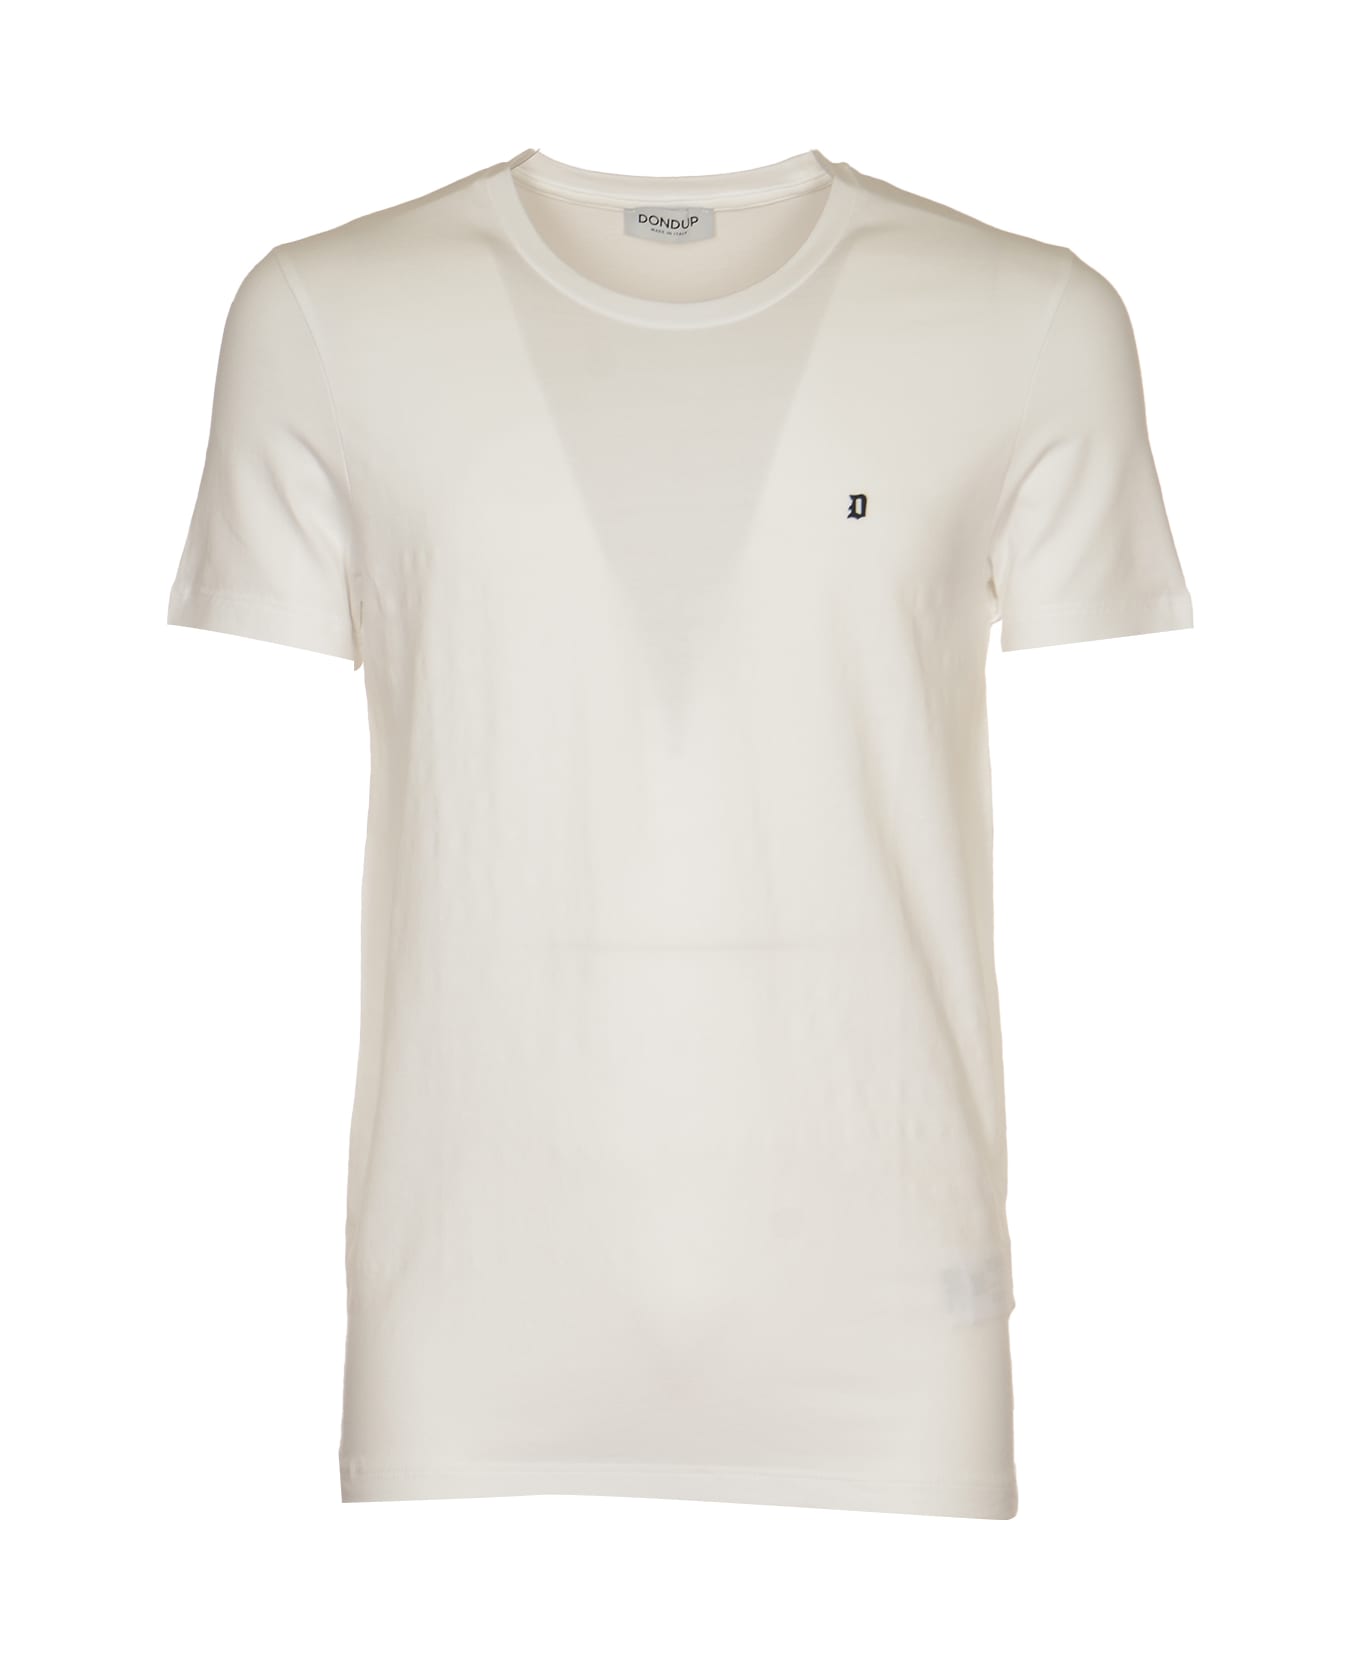 Dondup Round Neck T-shirt - White